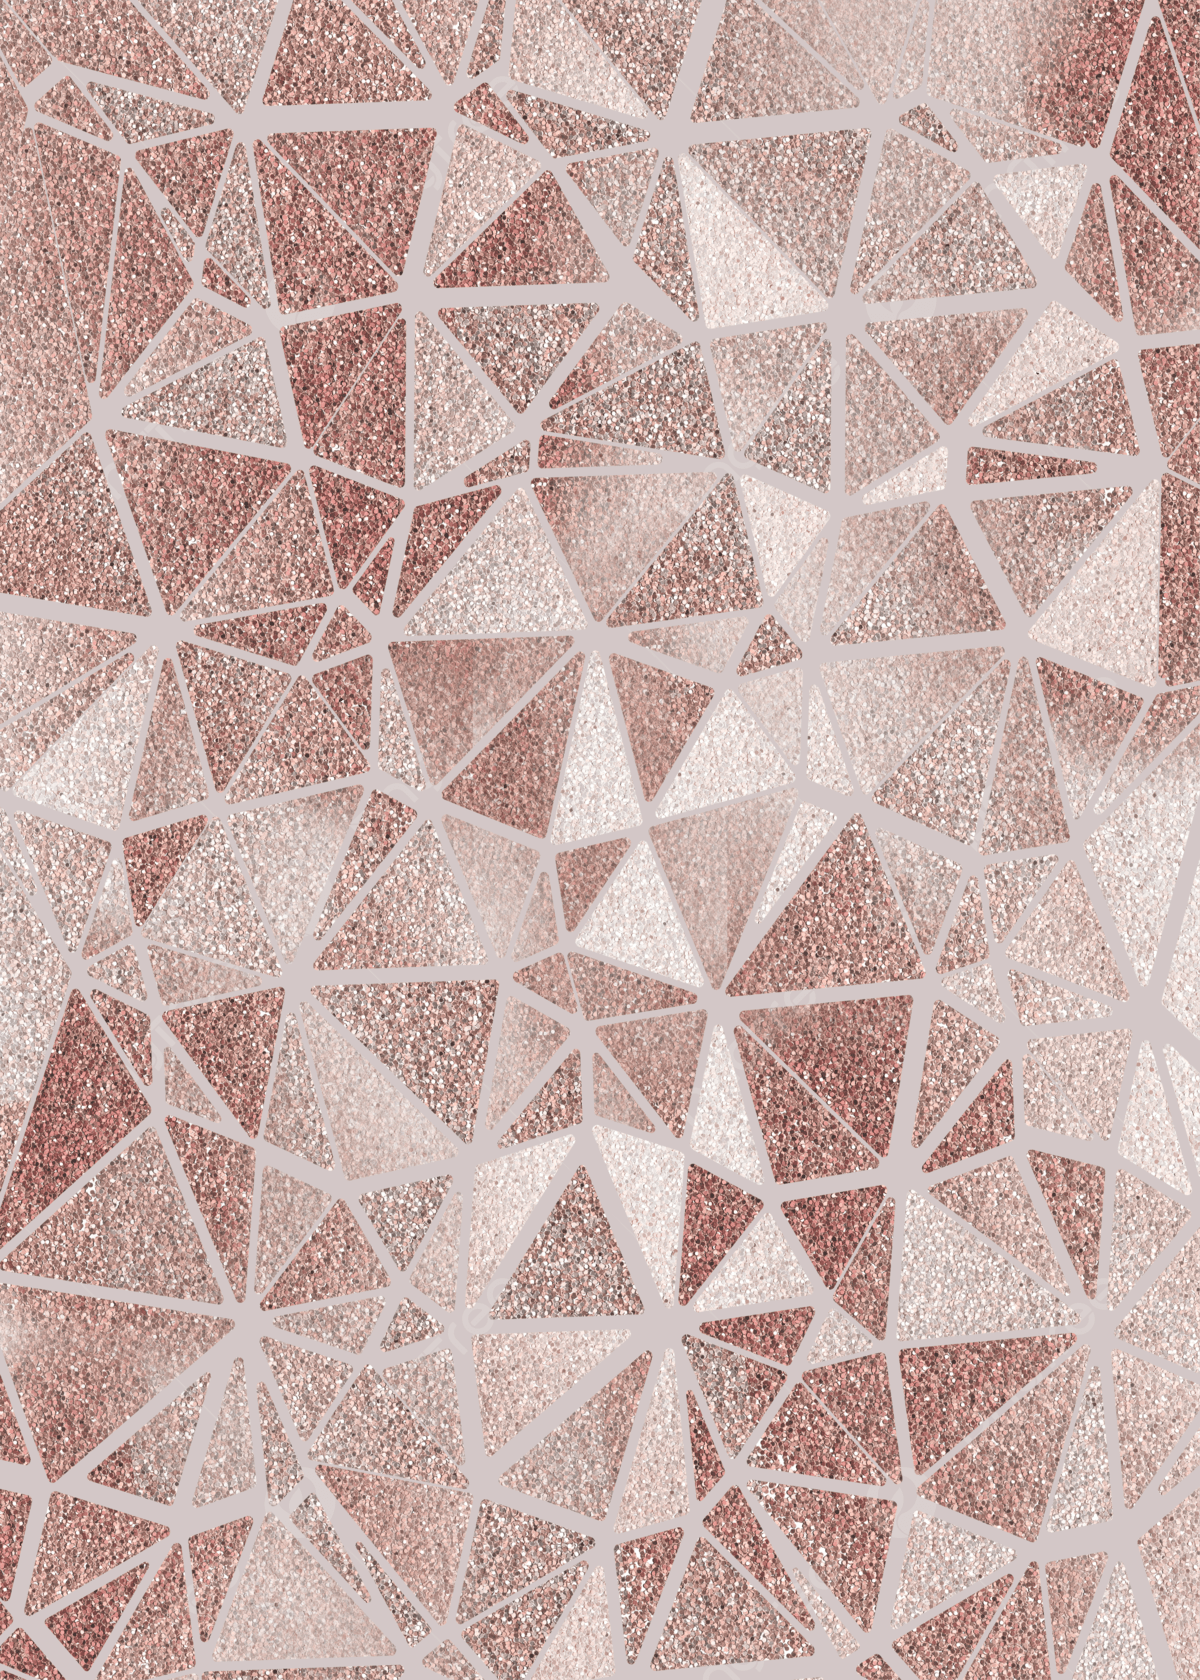 Rose Gold Shiny Aesthetic Art Background Geometric Irregular Wallpaper Image For Free Download